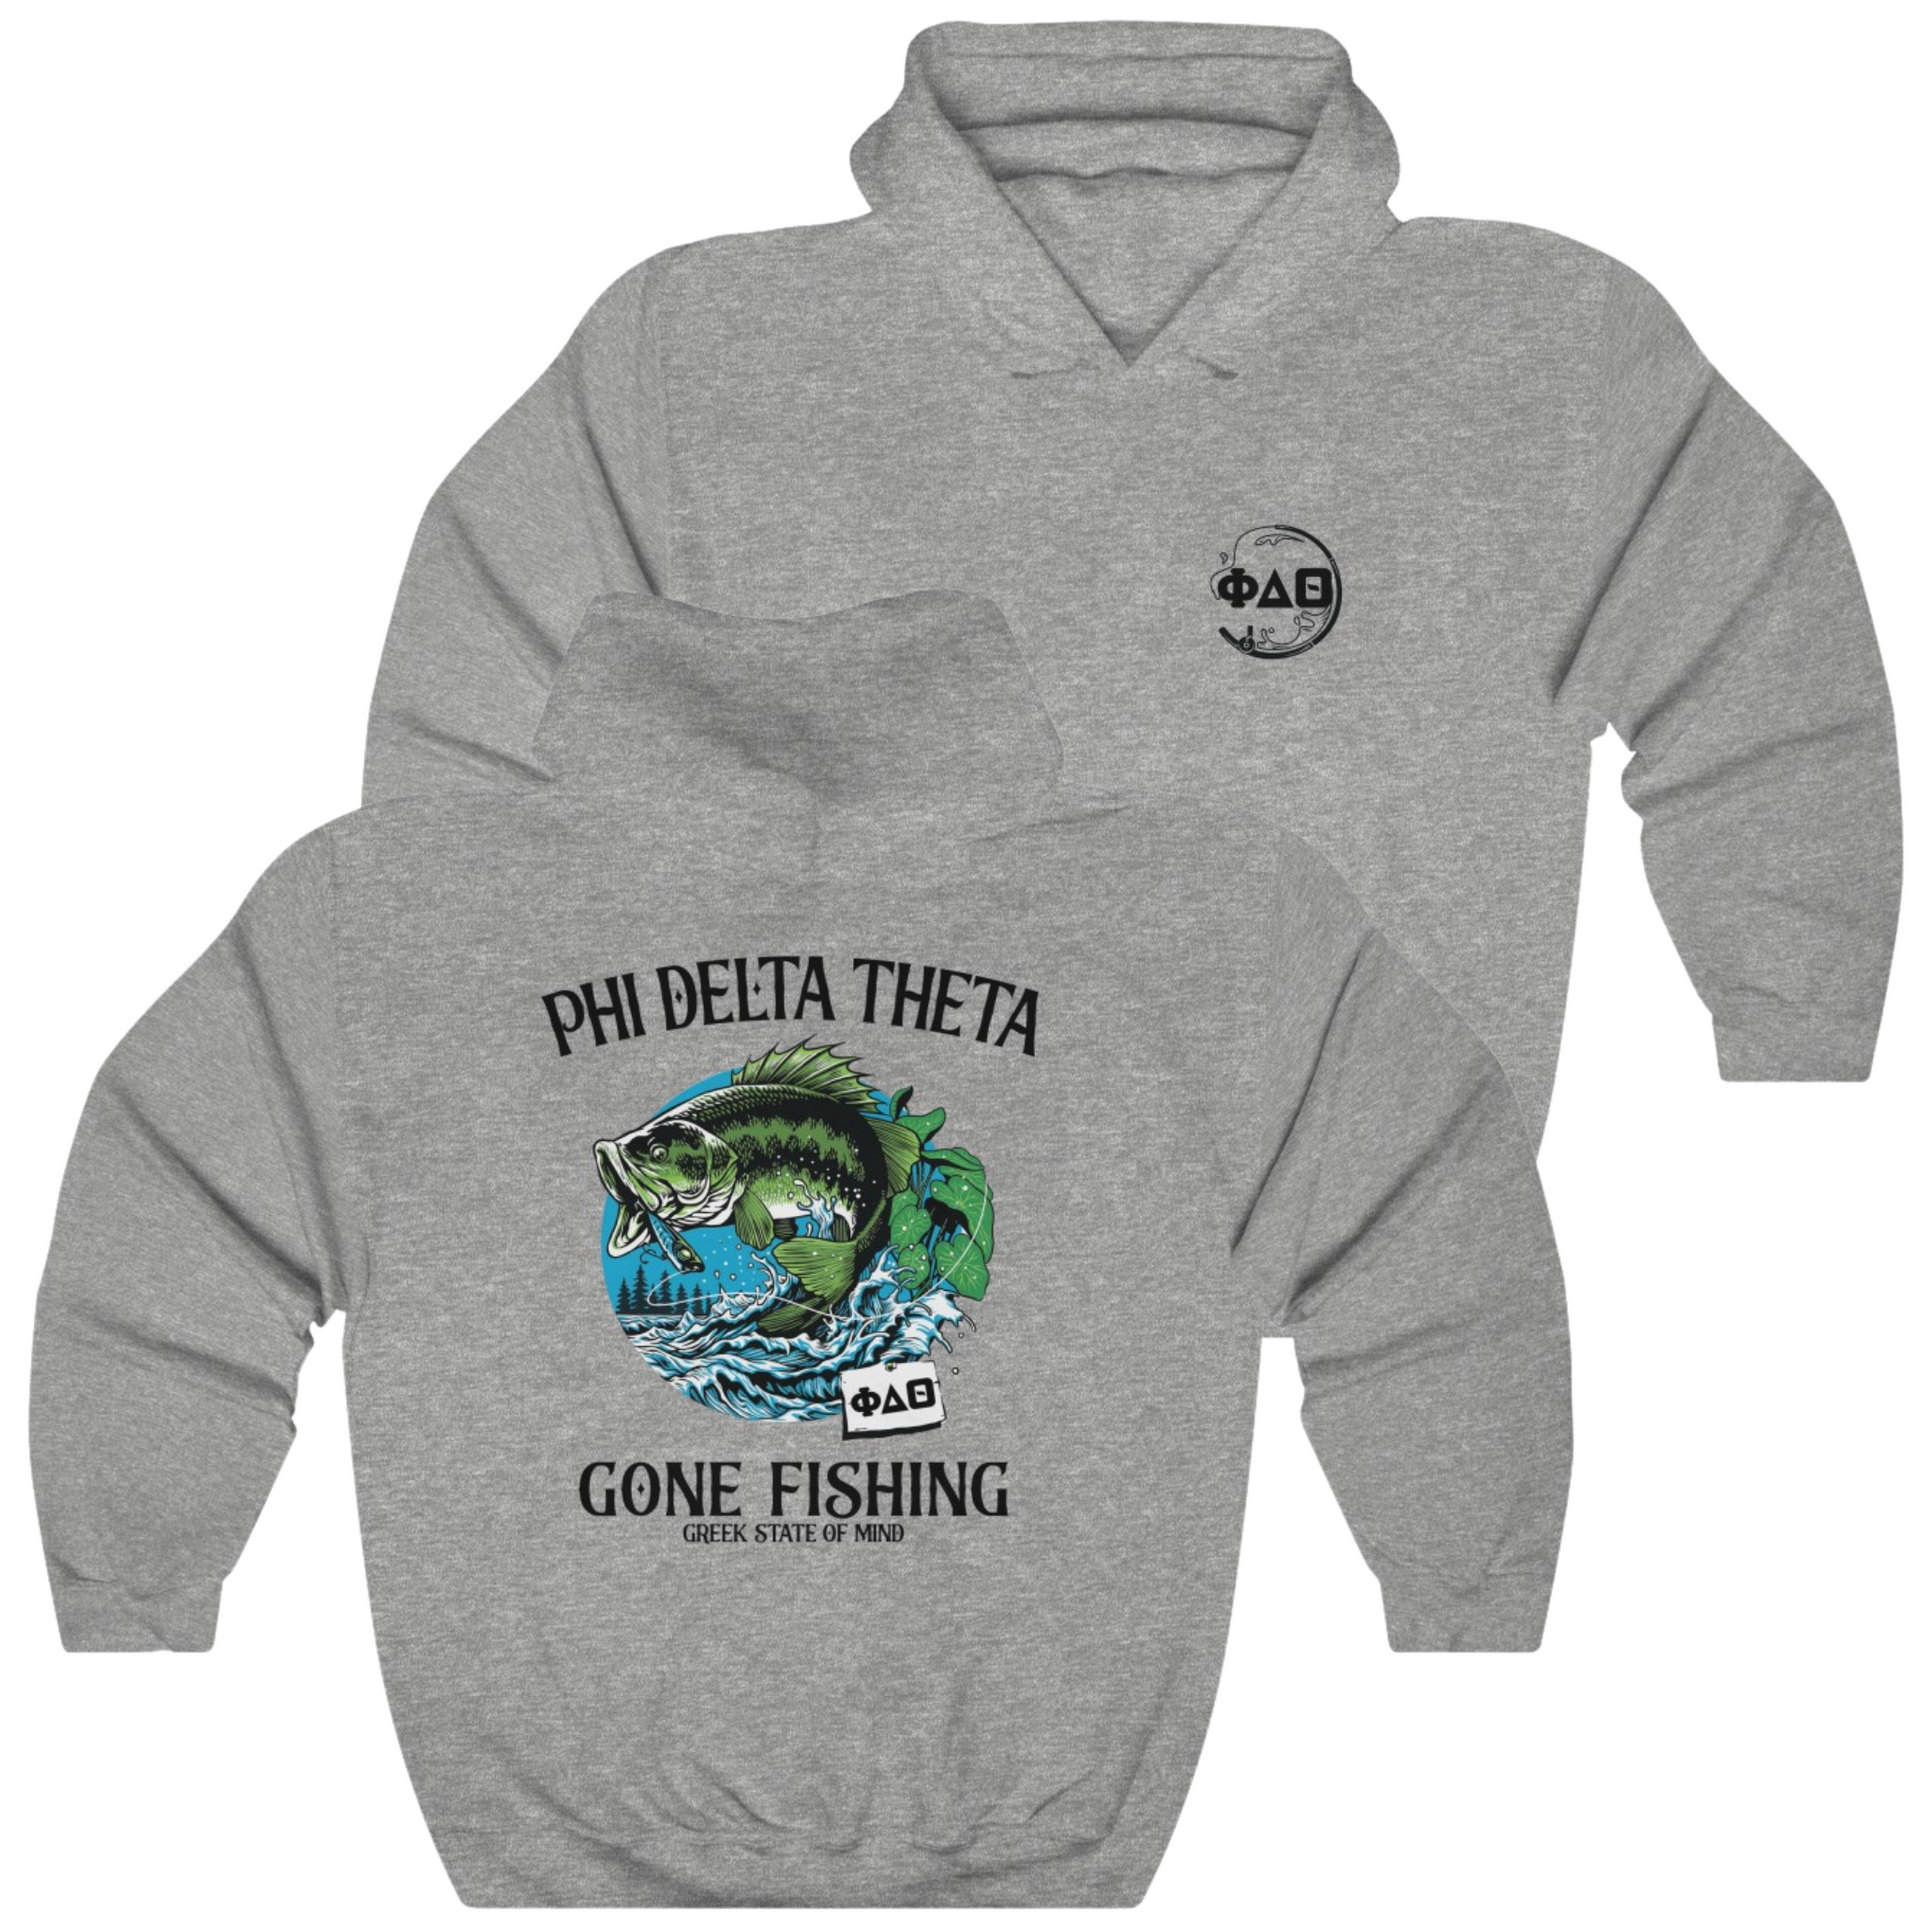 grey Phi Delta Theta Graphic Hoodie | Gone Fishing | phi delta theta fraternity greek apparel